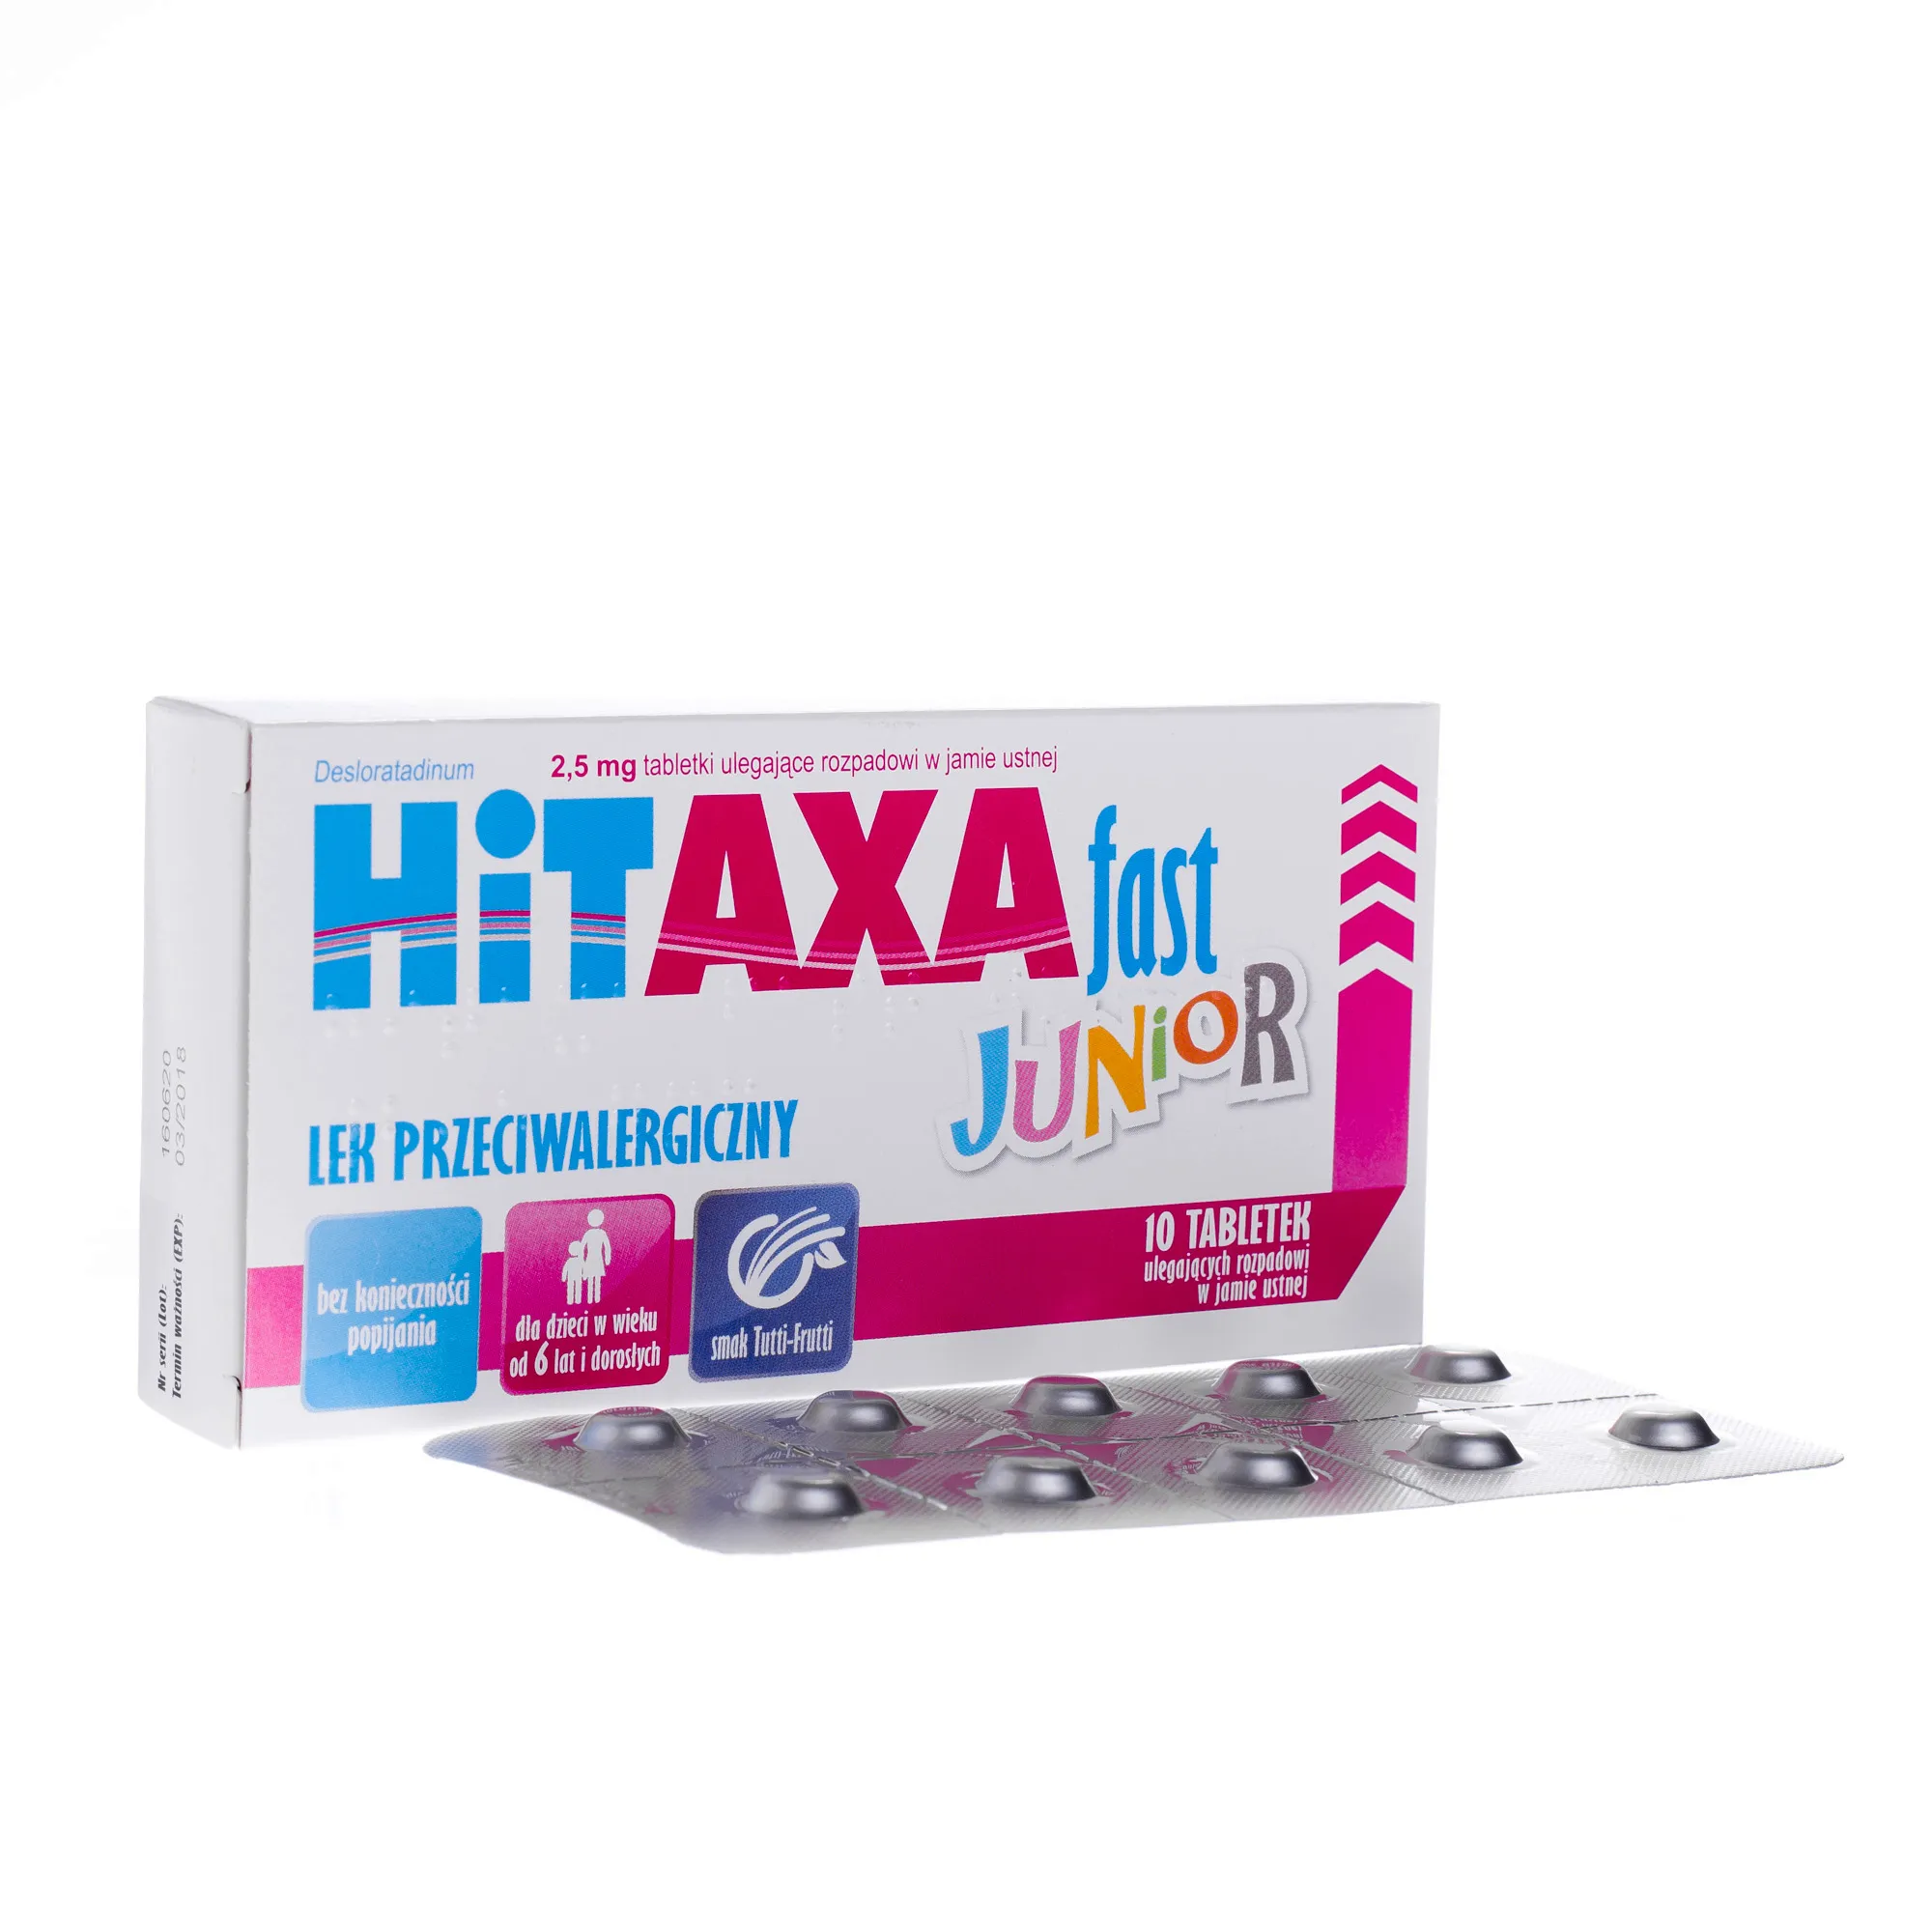 HITAXA fast junior, 10 tabletek